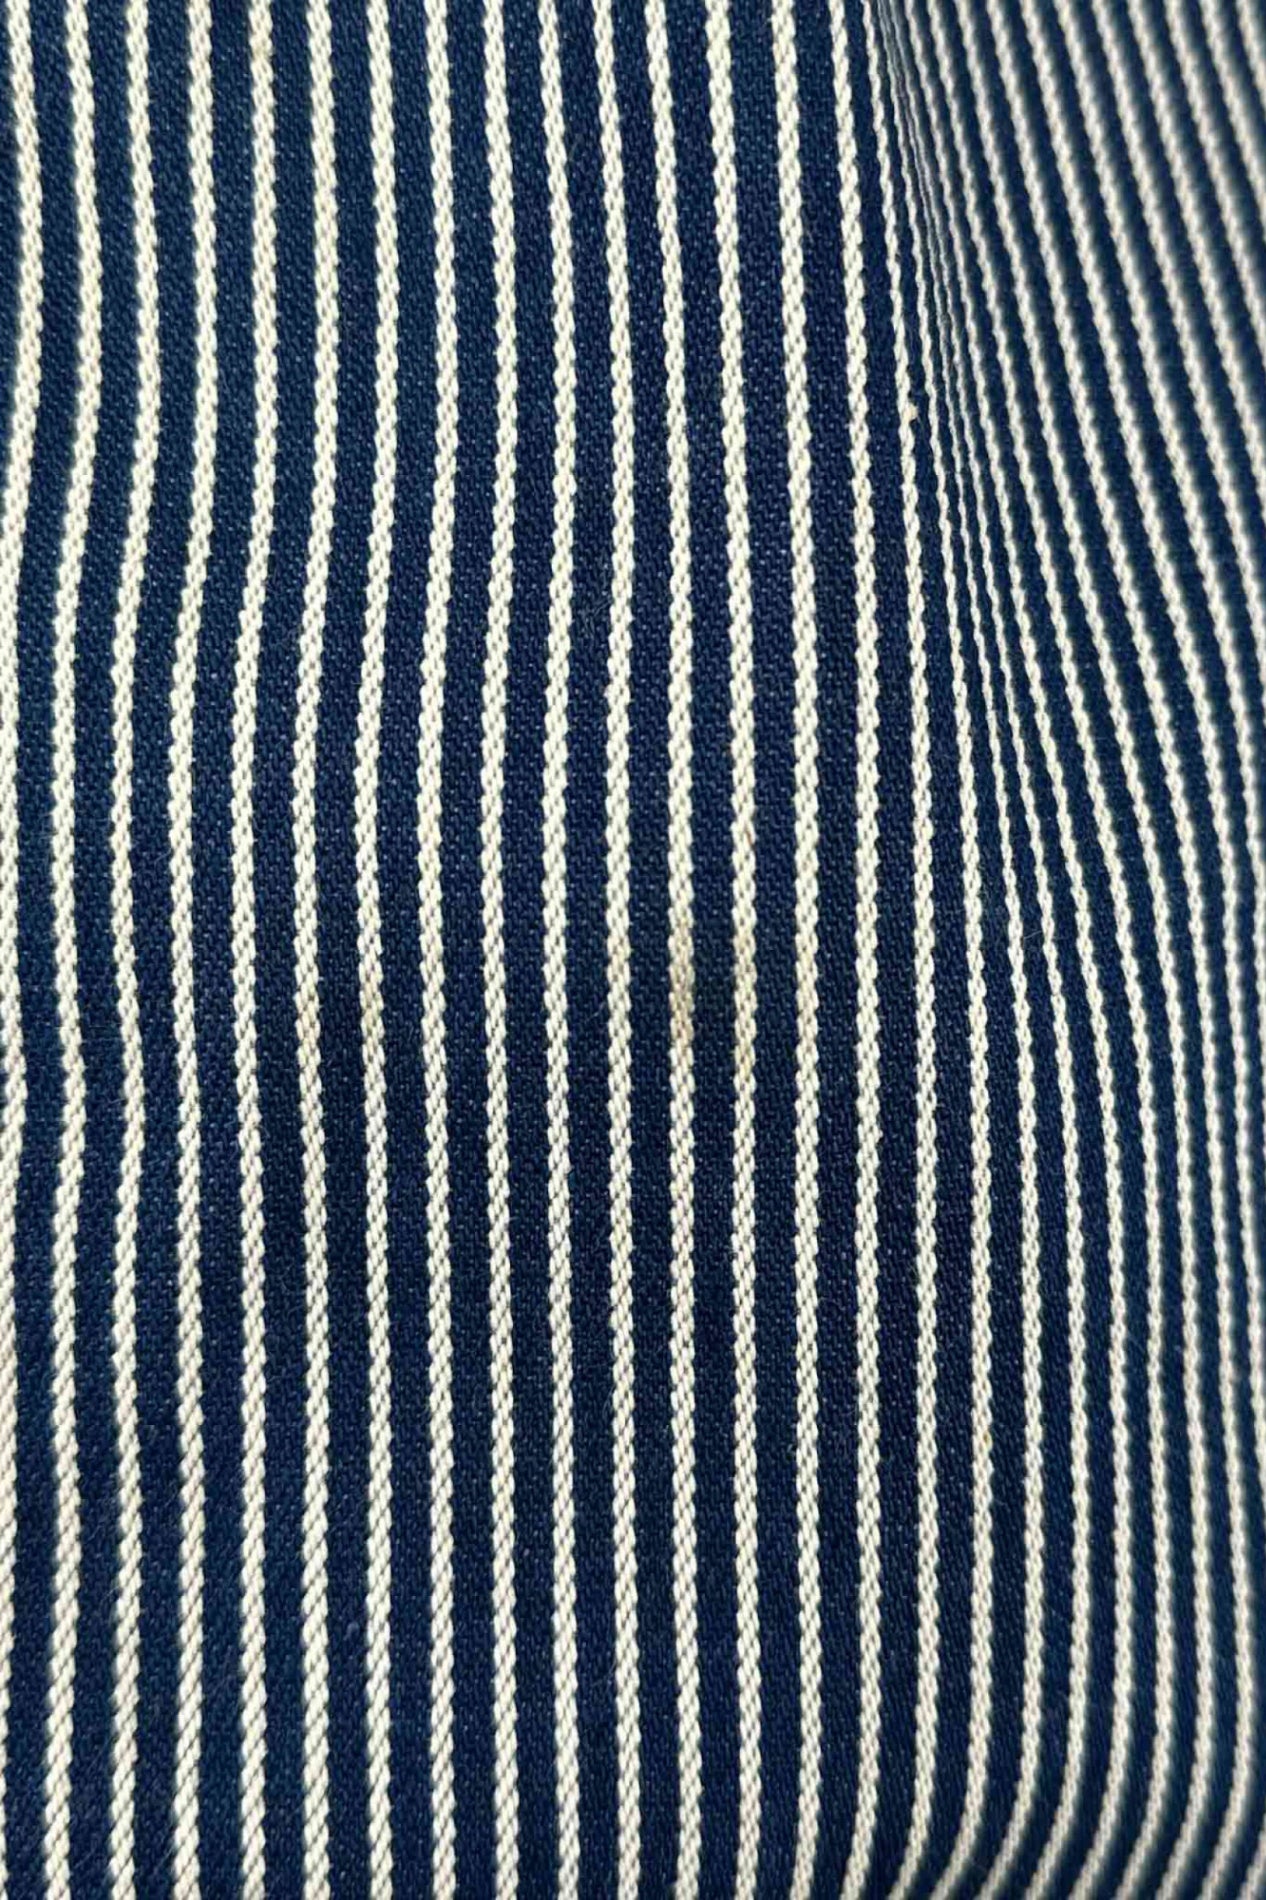 POINTER BRAND blue striped pants